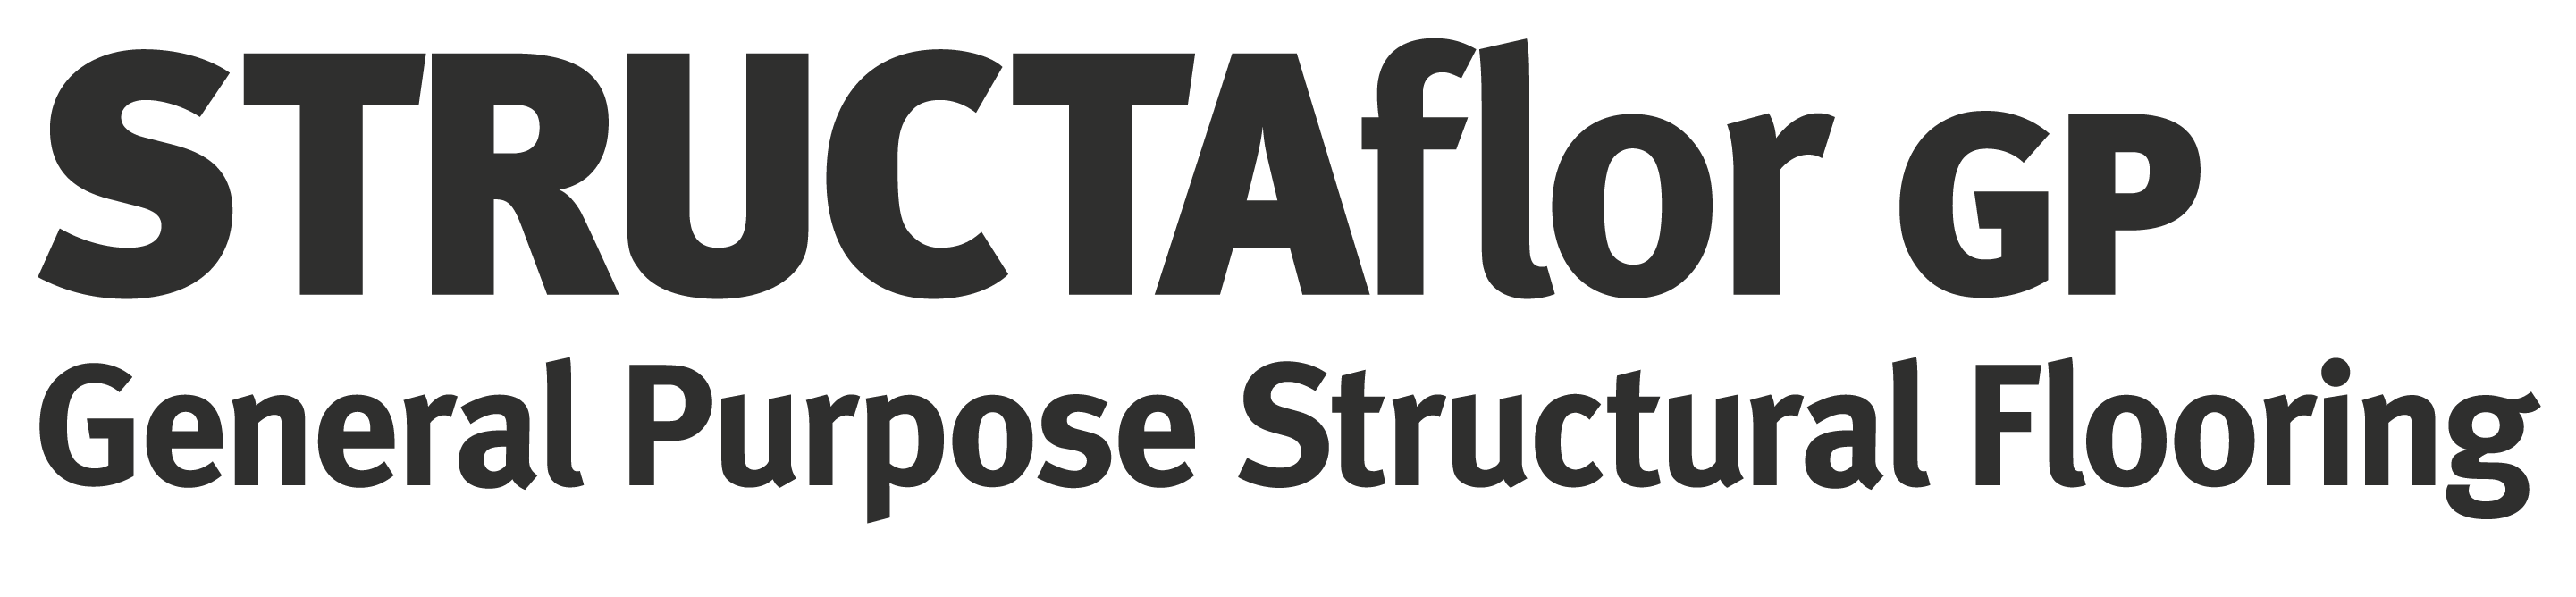 STRUCTAflor - General Purpose Structural Flooring